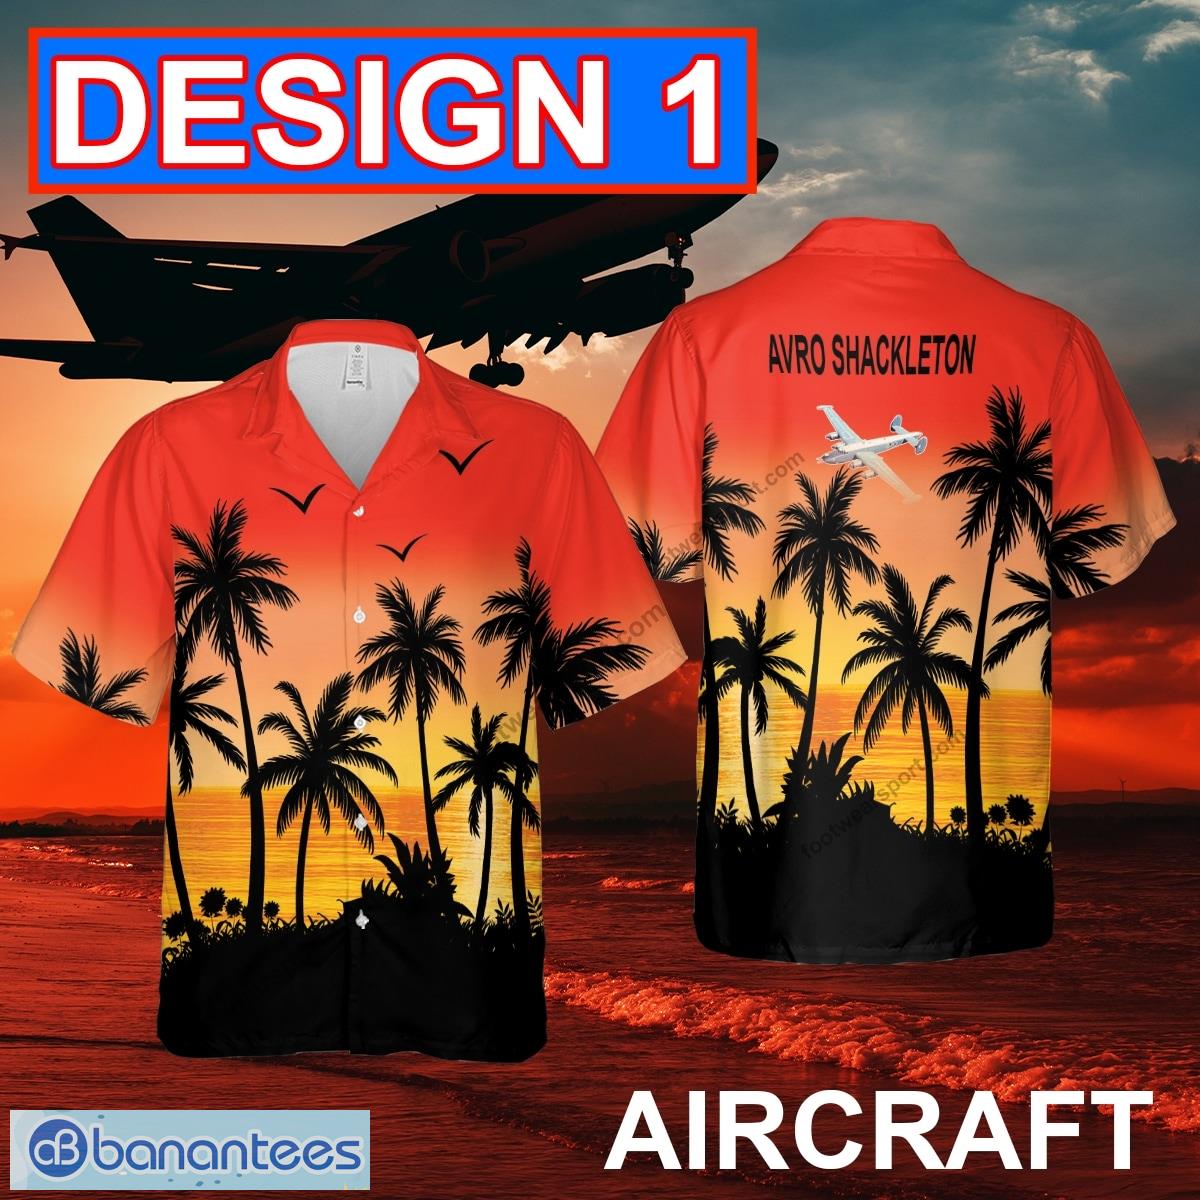 Avro Shackleton Aircraft 3D Hawaiian Shirt Red Color Special Gifts - Avro Shackleton Aircraft Hawaiian Shirt Multi Design 1